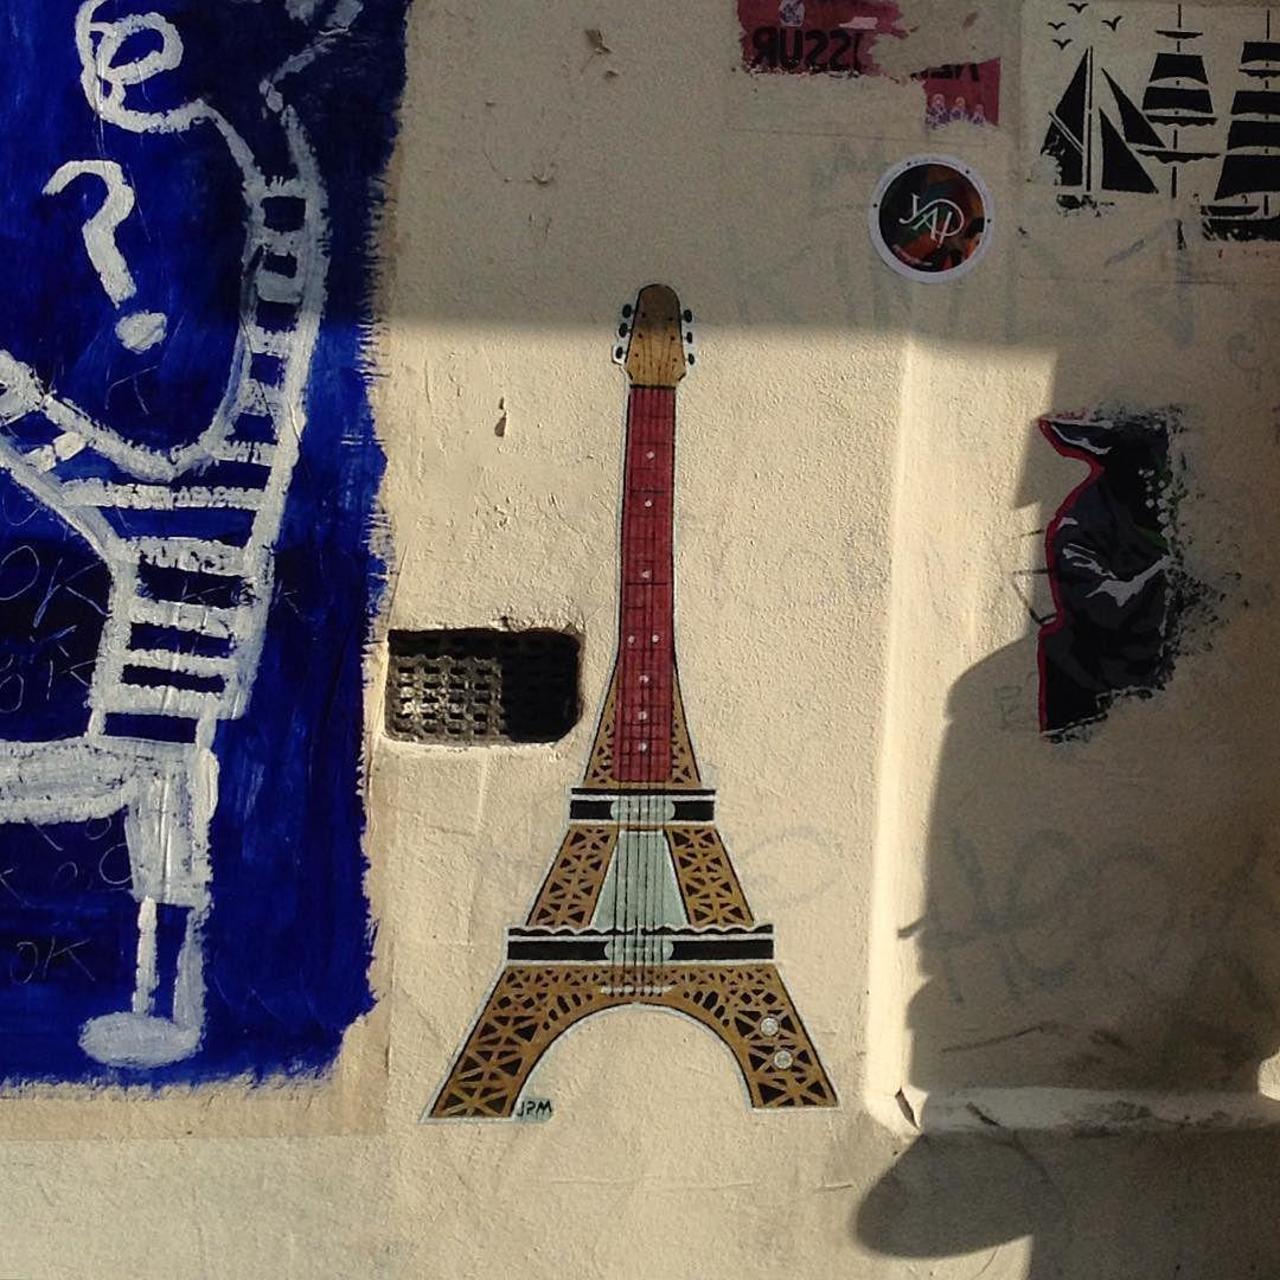 #Paris #graffiti photo by @vgsman http://ift.tt/1RLK2D9 #StreetArt http://t.co/G9scBd3uBD